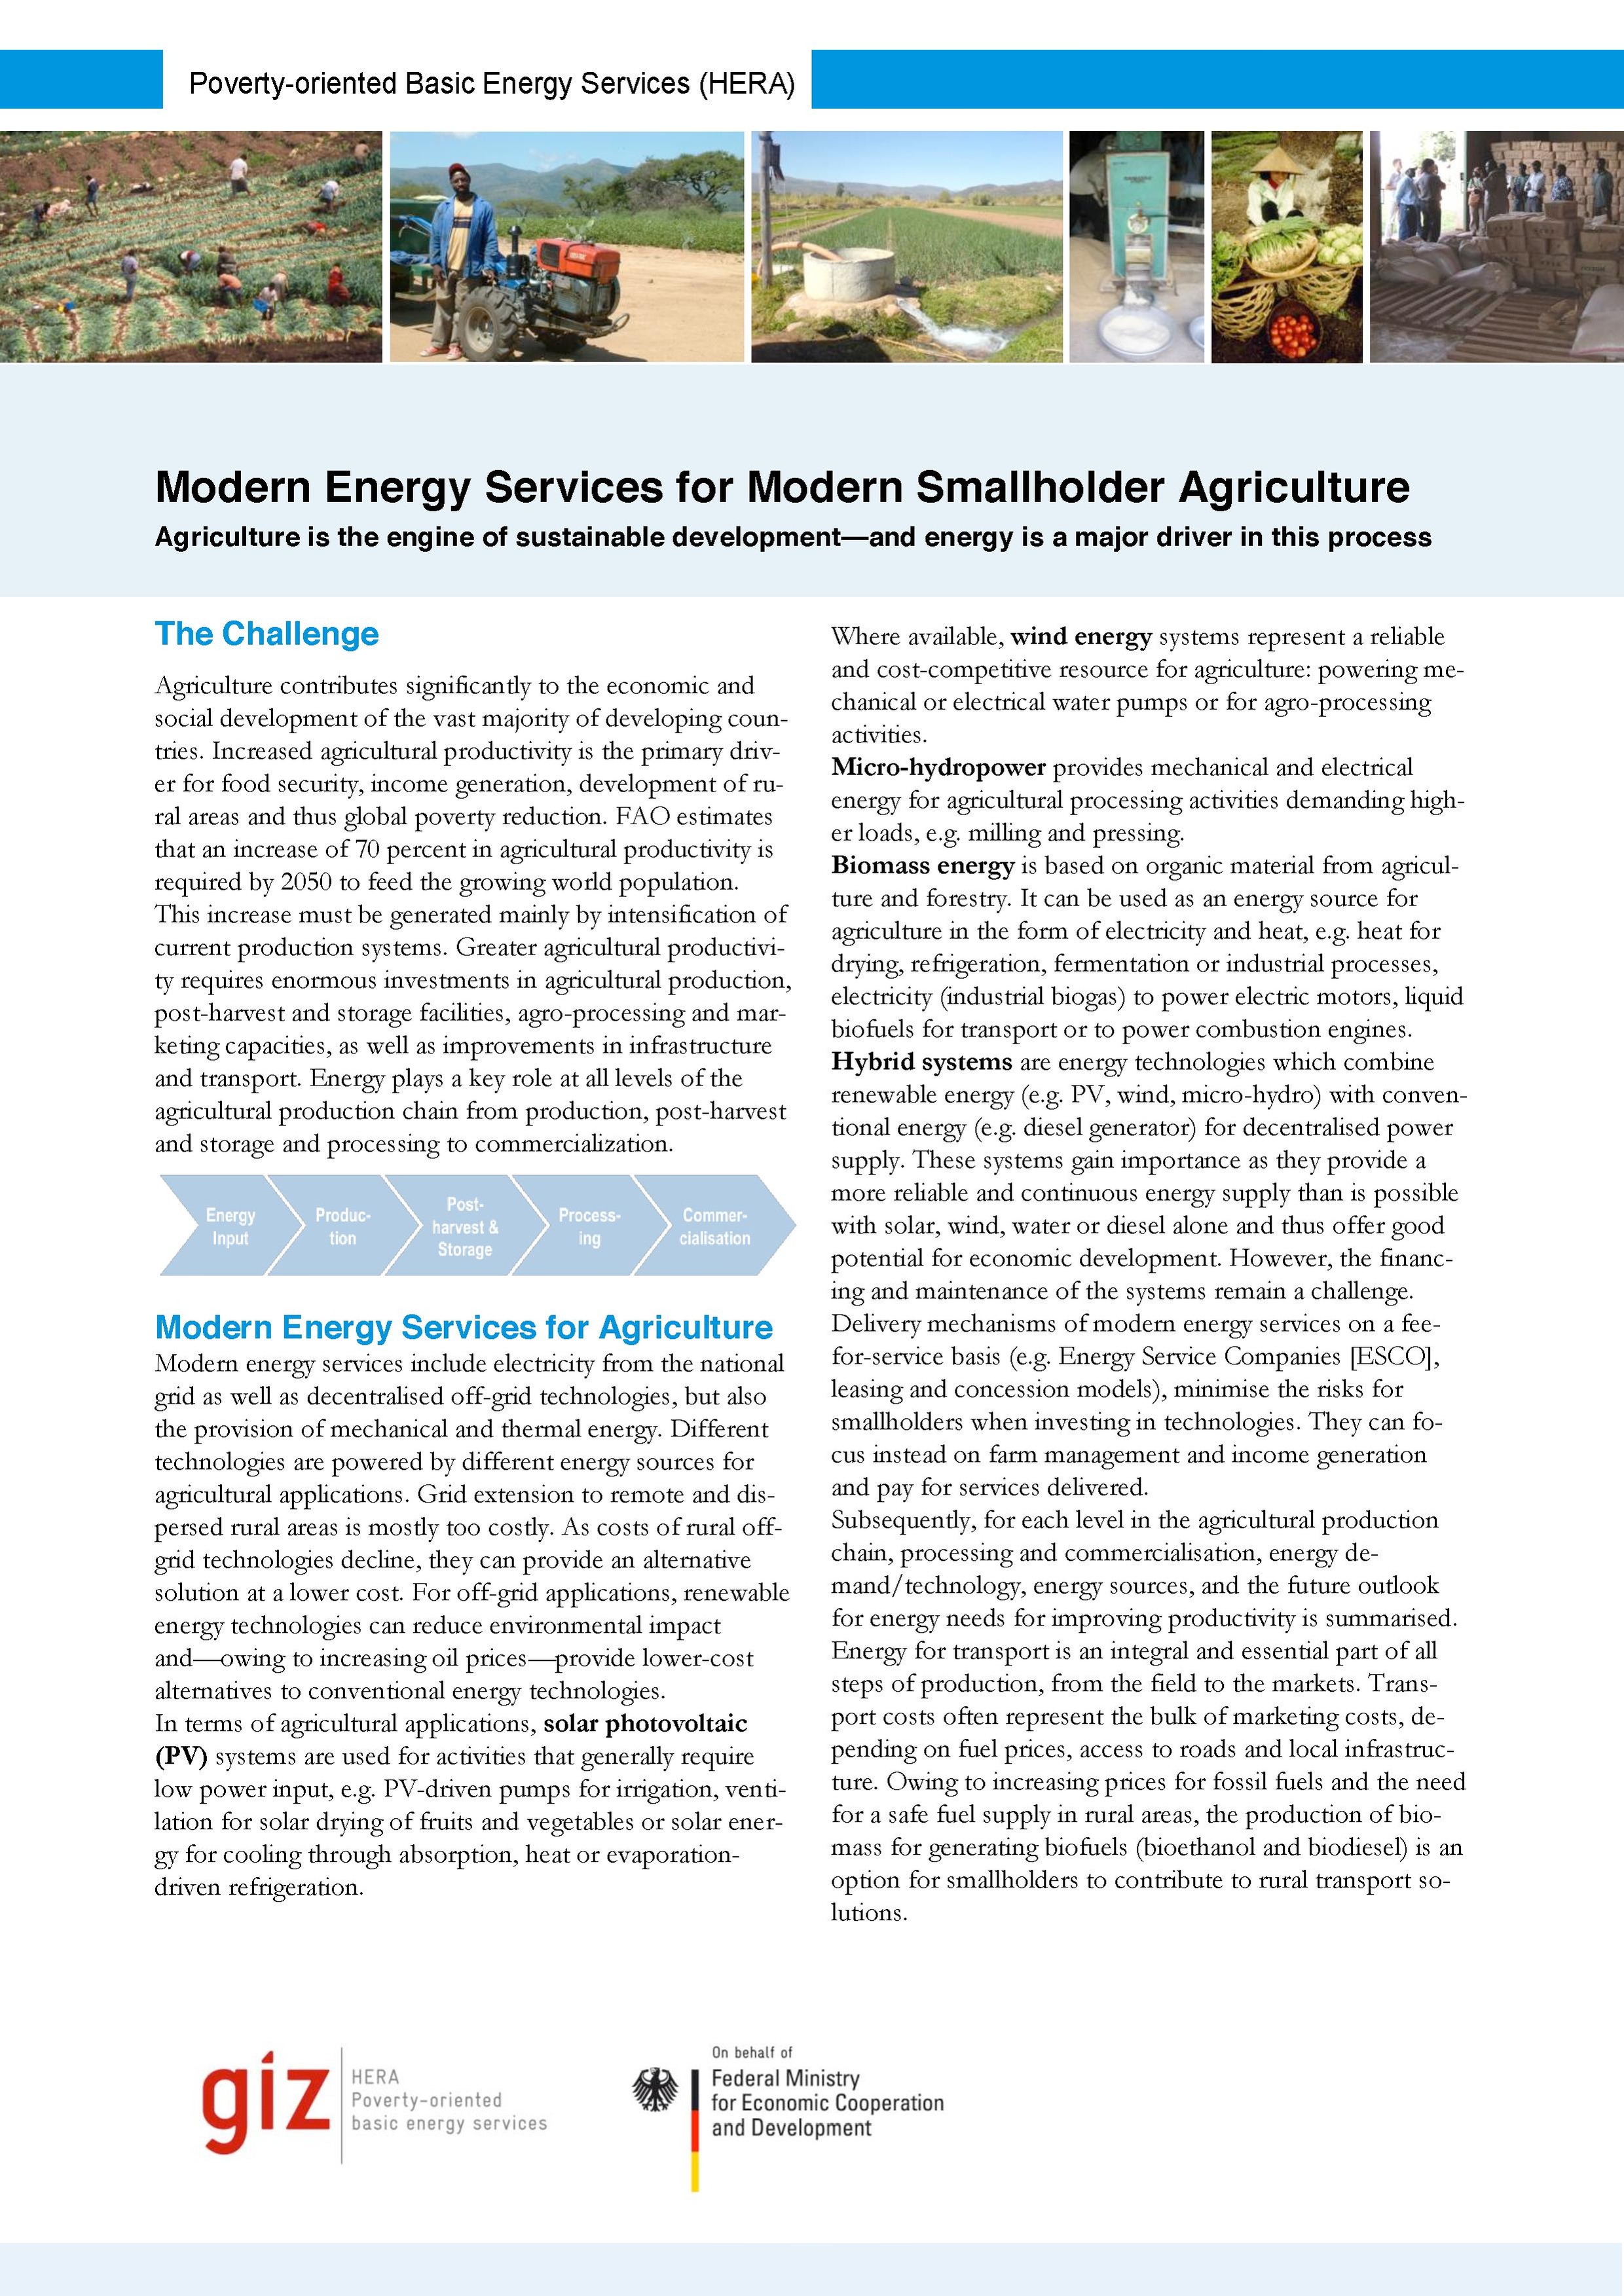 GIZ-HERA publication: Modern Energy Services for Modern Agriculture